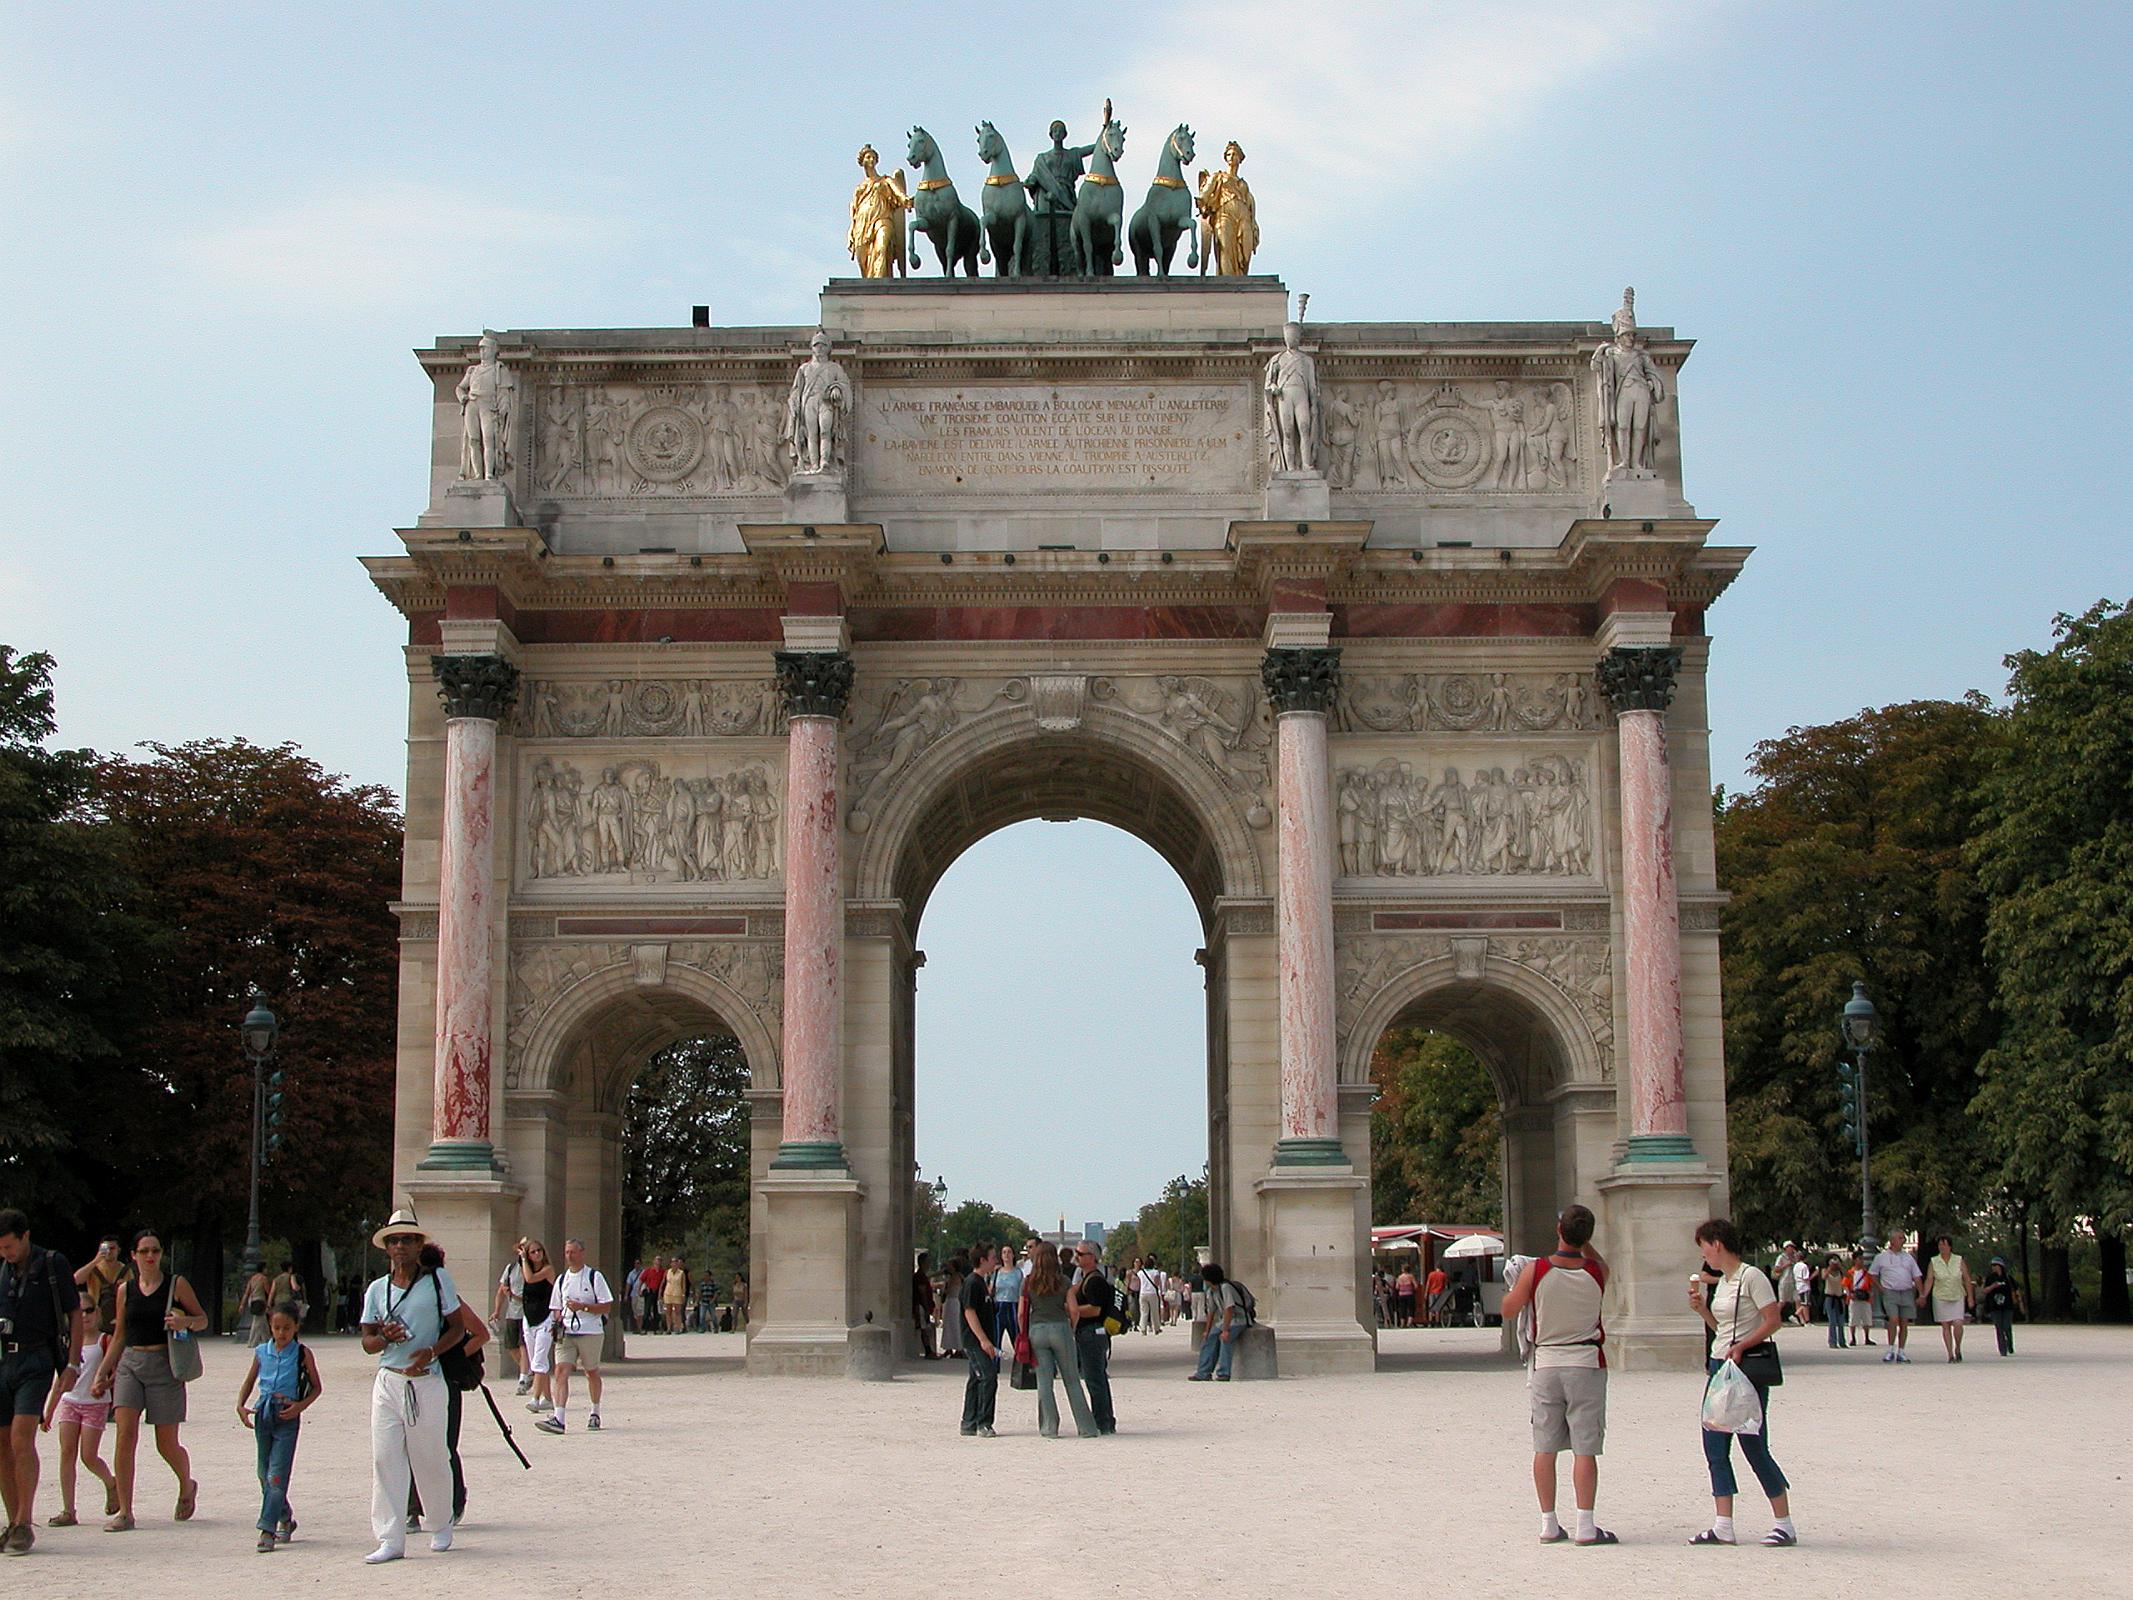 Paris 01 Arc de Triomphe du Carrousel was built between 1806 and 1808 to commemorate Napoleon's military victories 